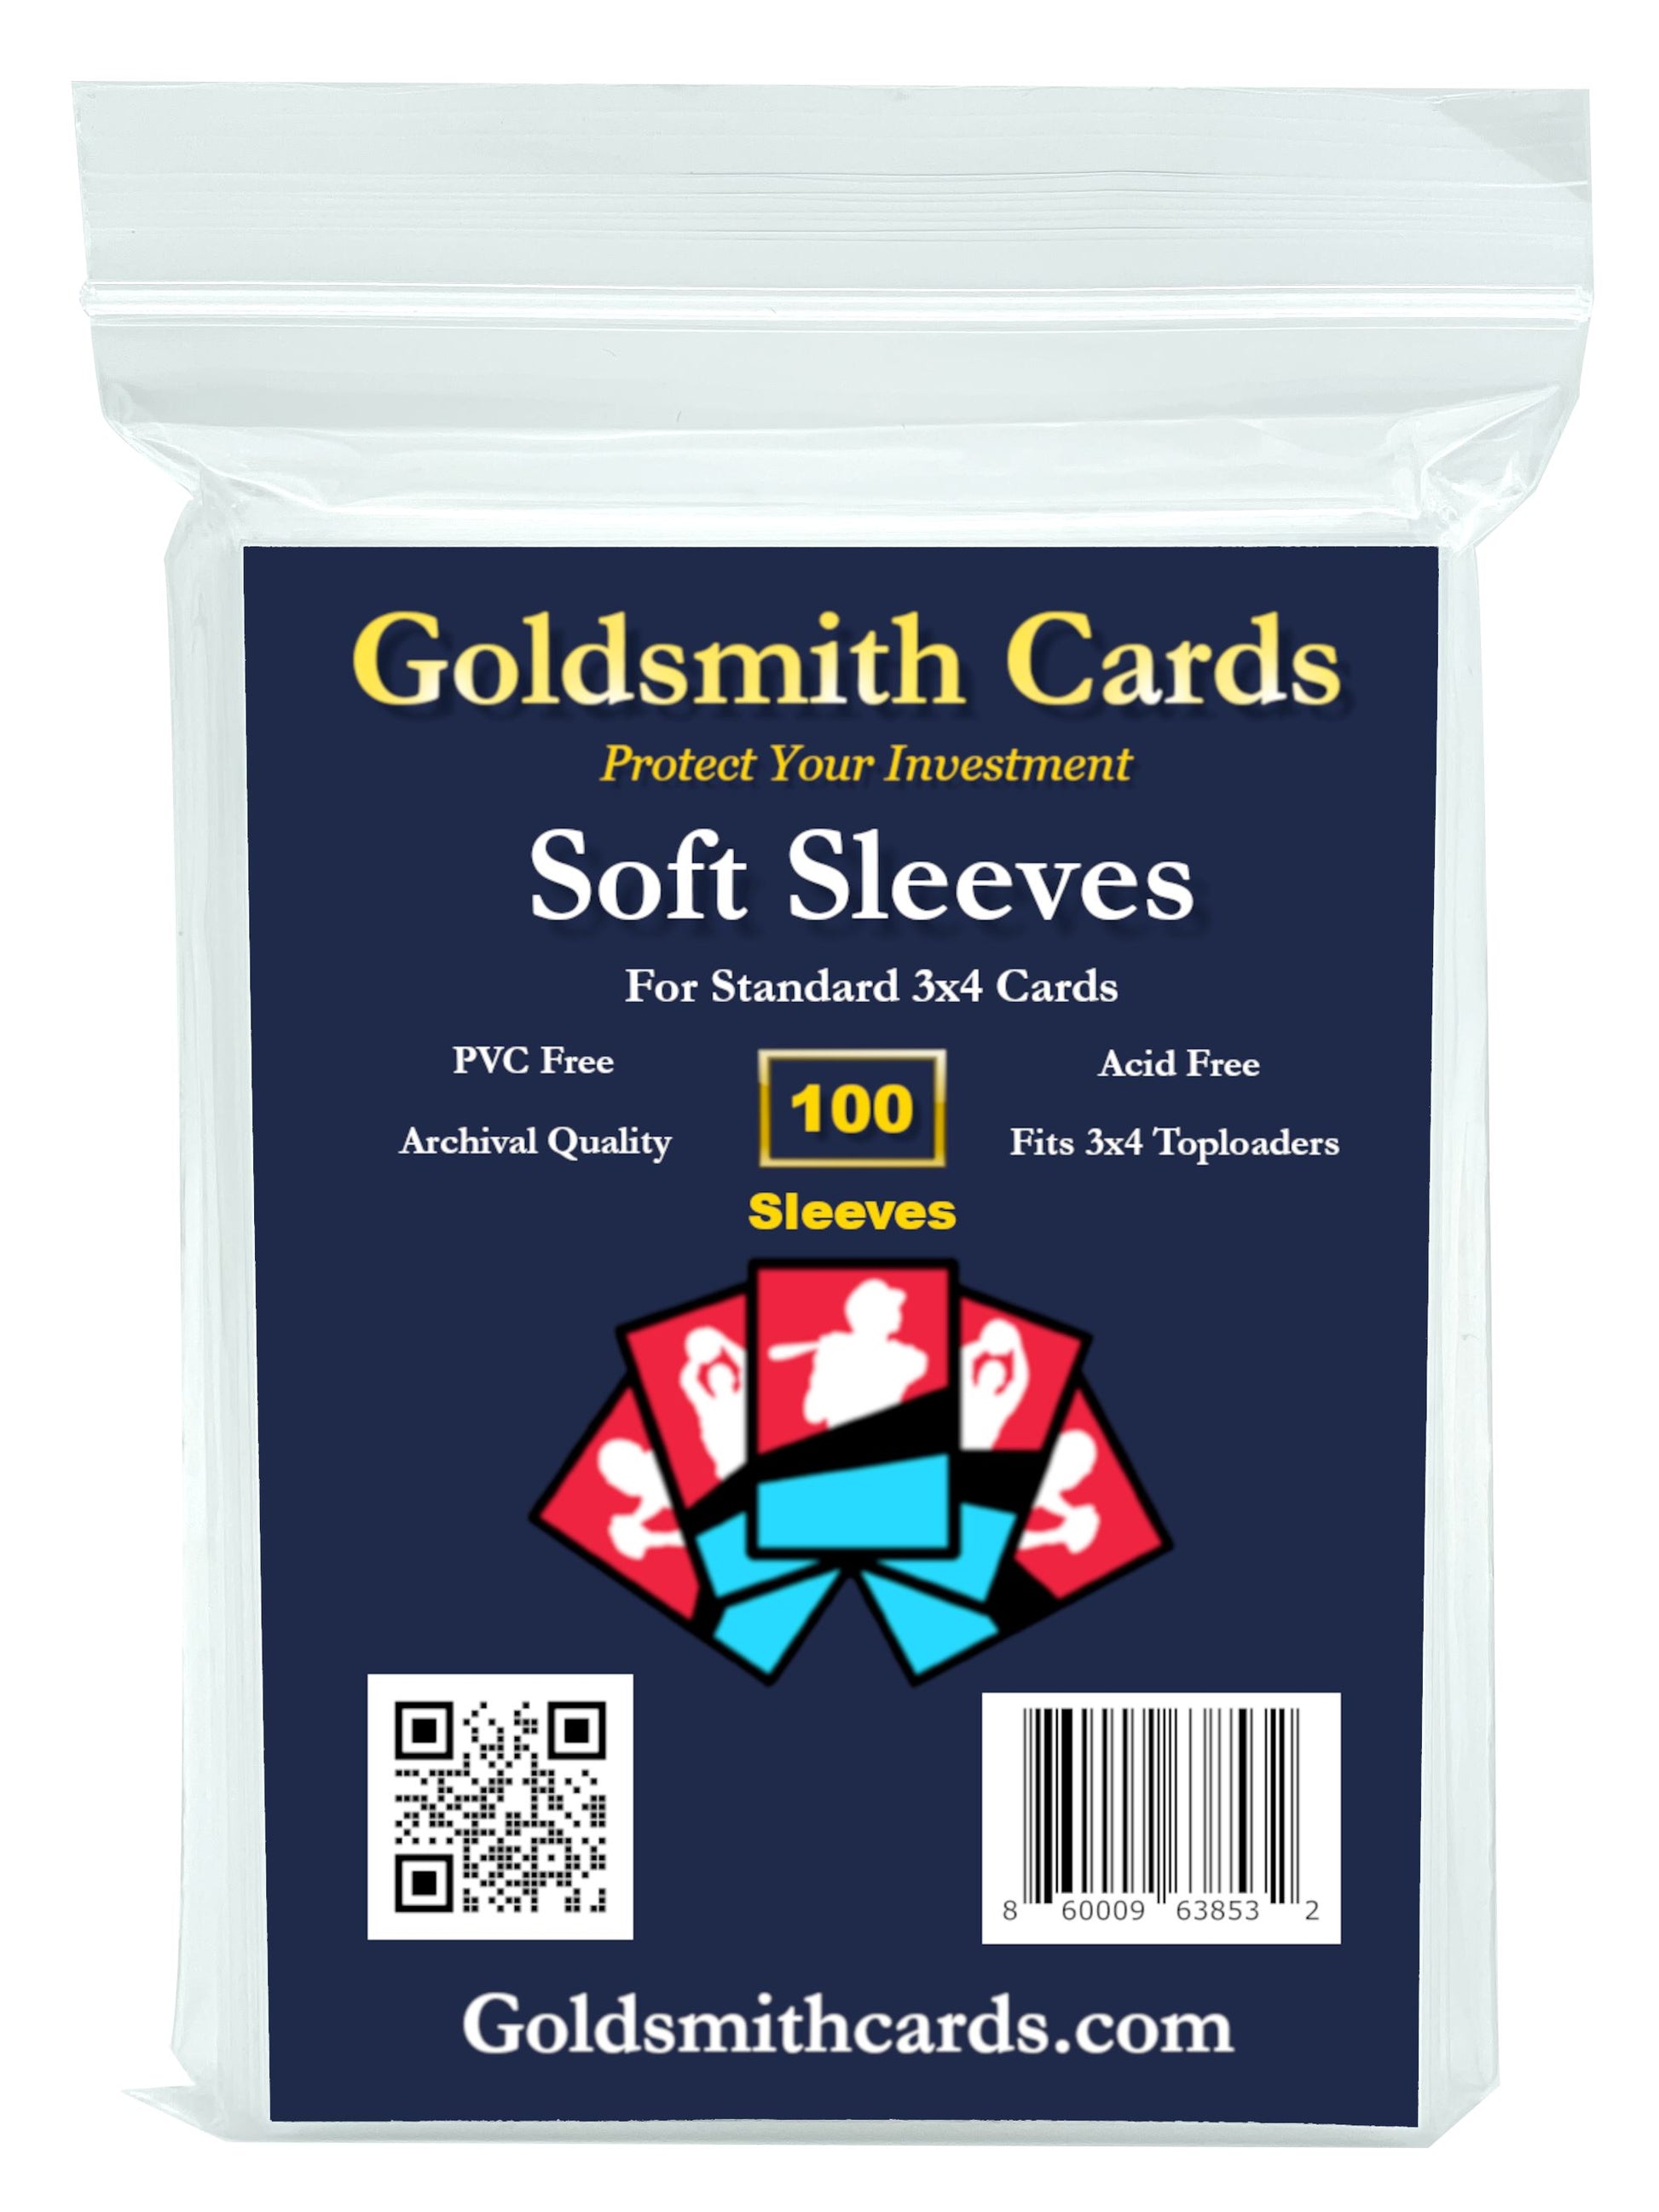 100 Soft Plastic Trading Card Sleeves / Acid Free, Archival